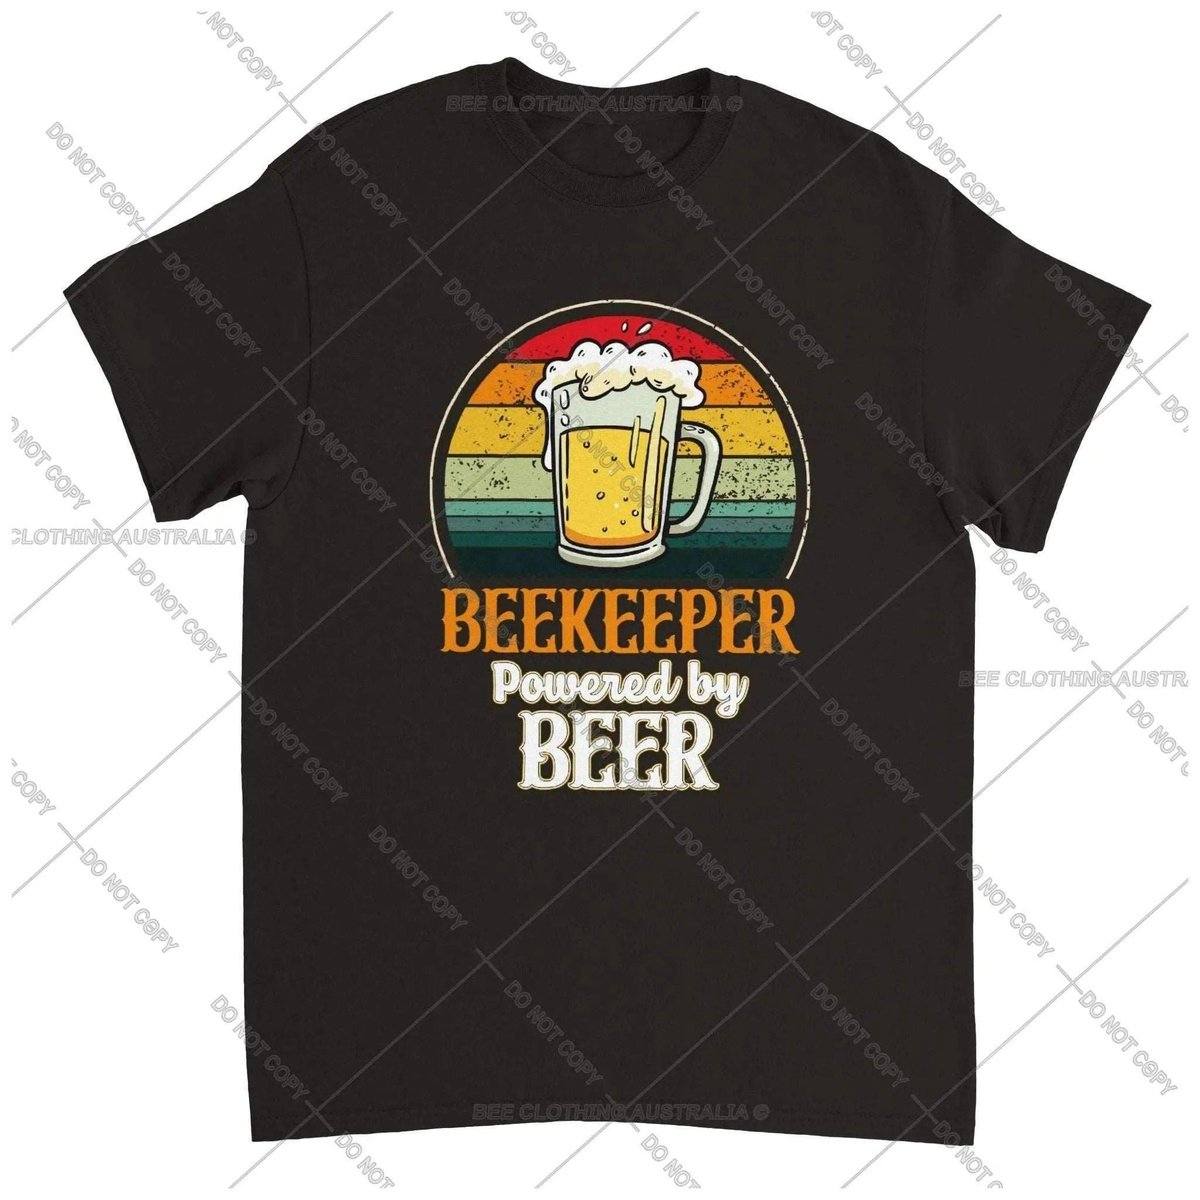 Beekeeper - Powered By Beer Tshirt - Retro Vintage Bee - Unisex Crewneck T-shirt Adults T-Shirts Unisex Bee Clothing Australia